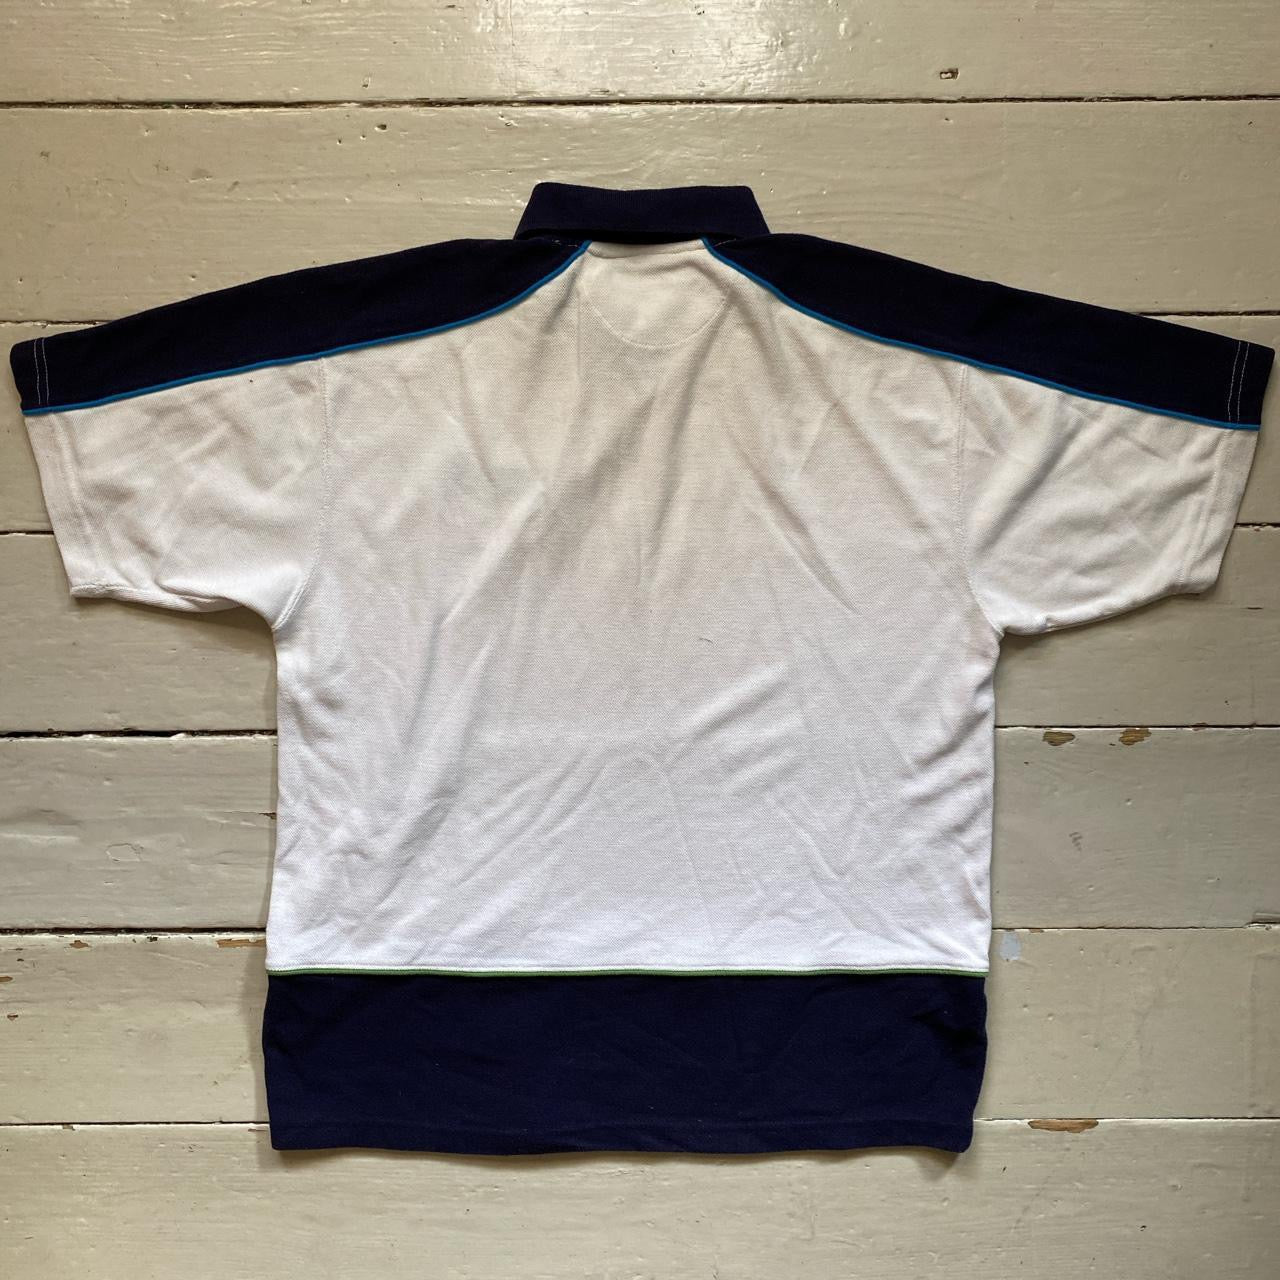 Reebok Athletic Polo Shirt (Medium)